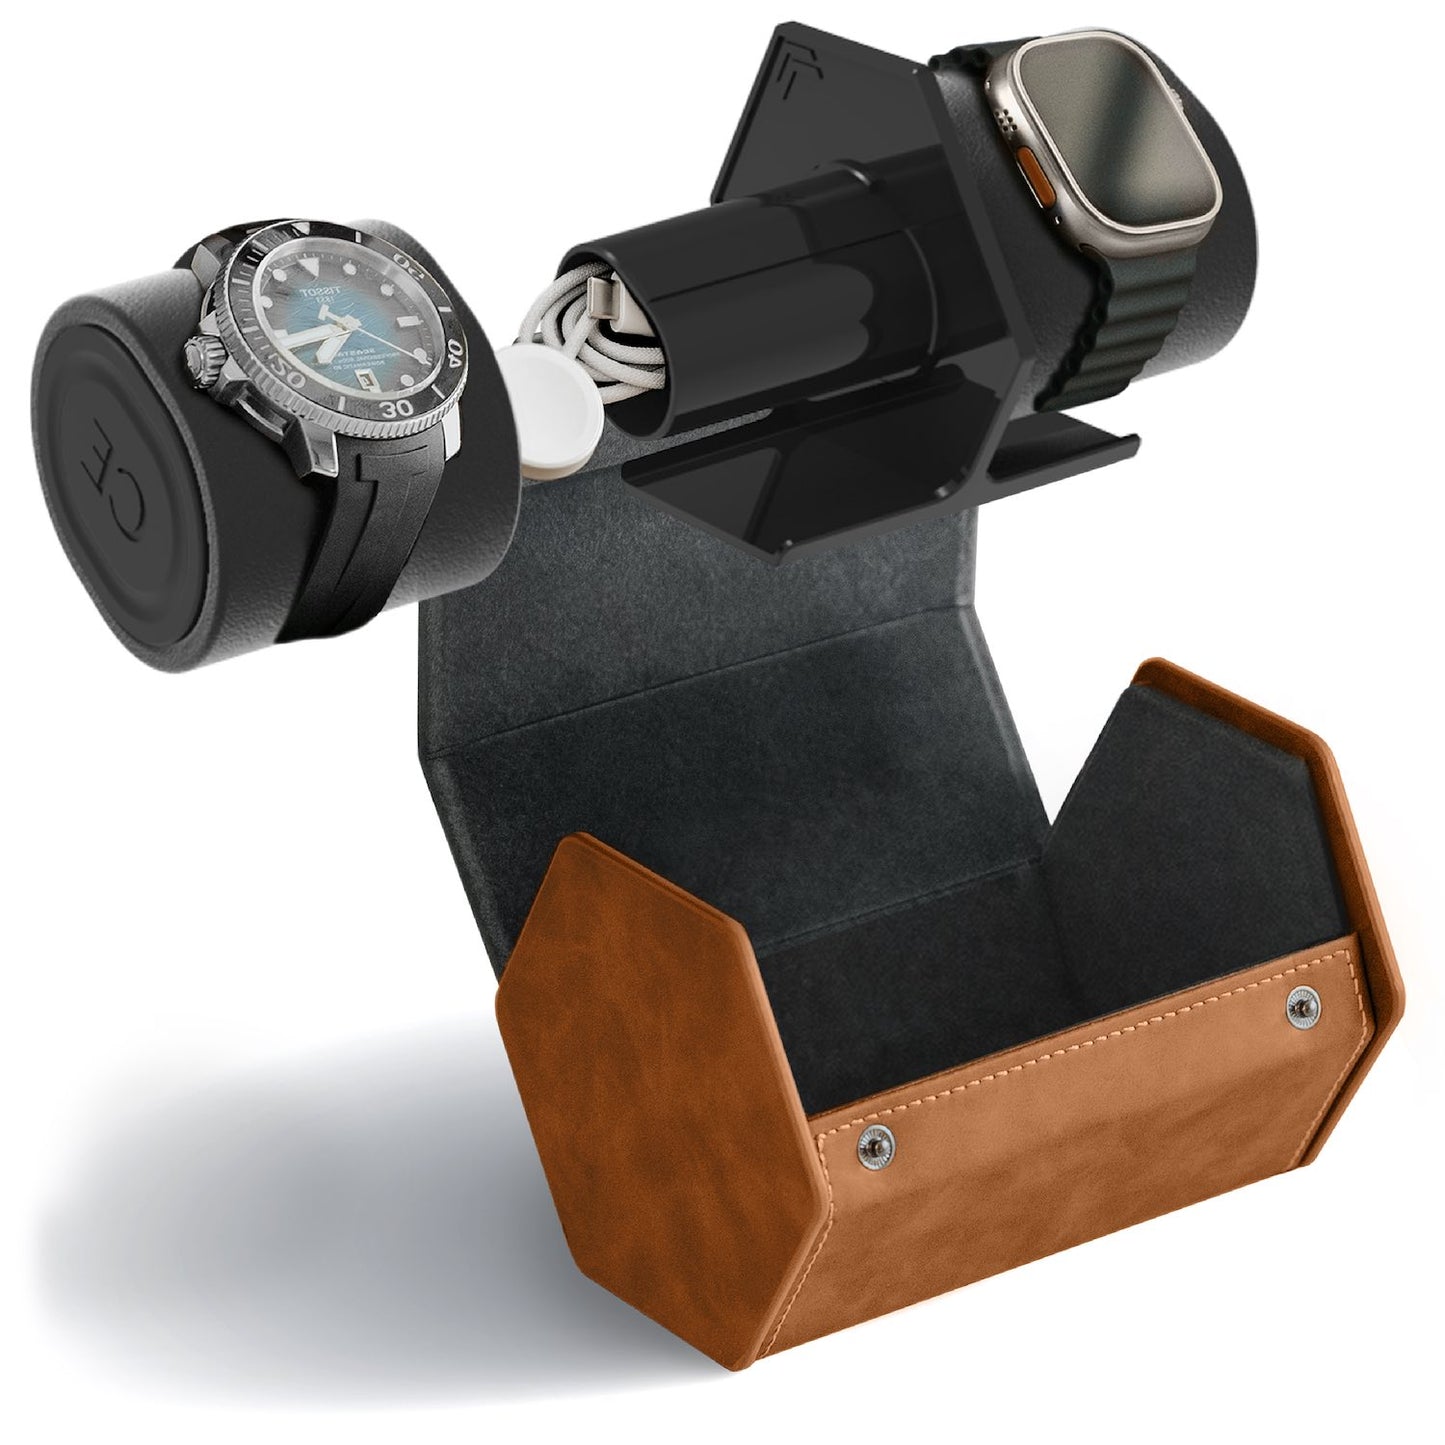 HEX Travel Watch Roll - 2 Slot